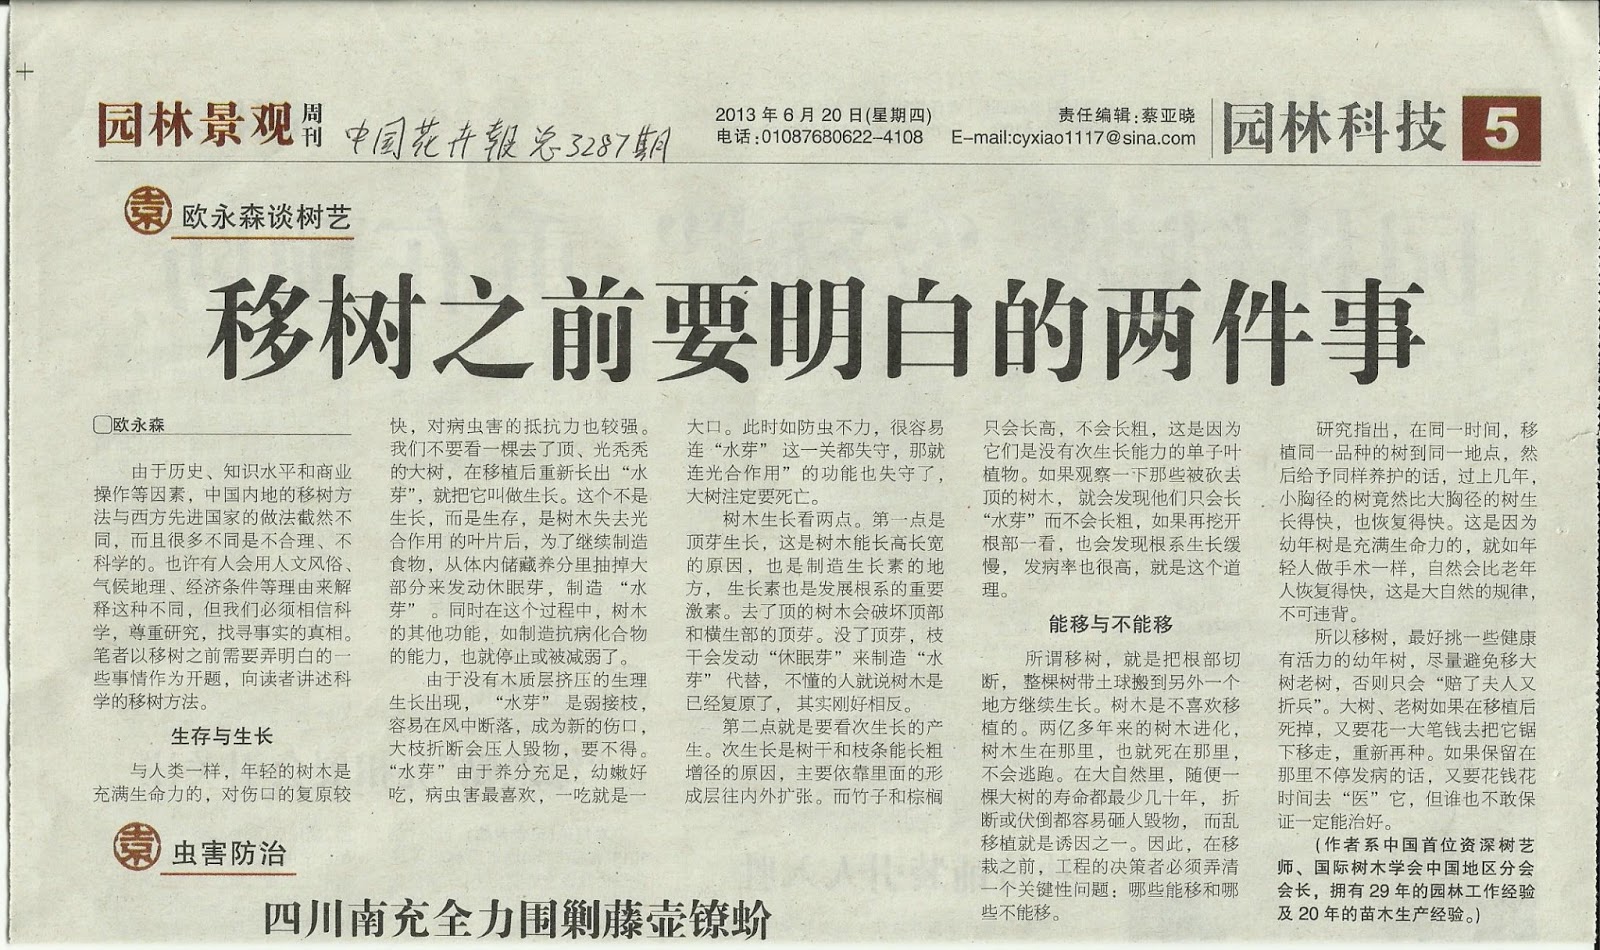 China Arborist Association Caa Cgn S Sammy Au On Arboriculture 中国花卉报 的 树艺专栏 报导